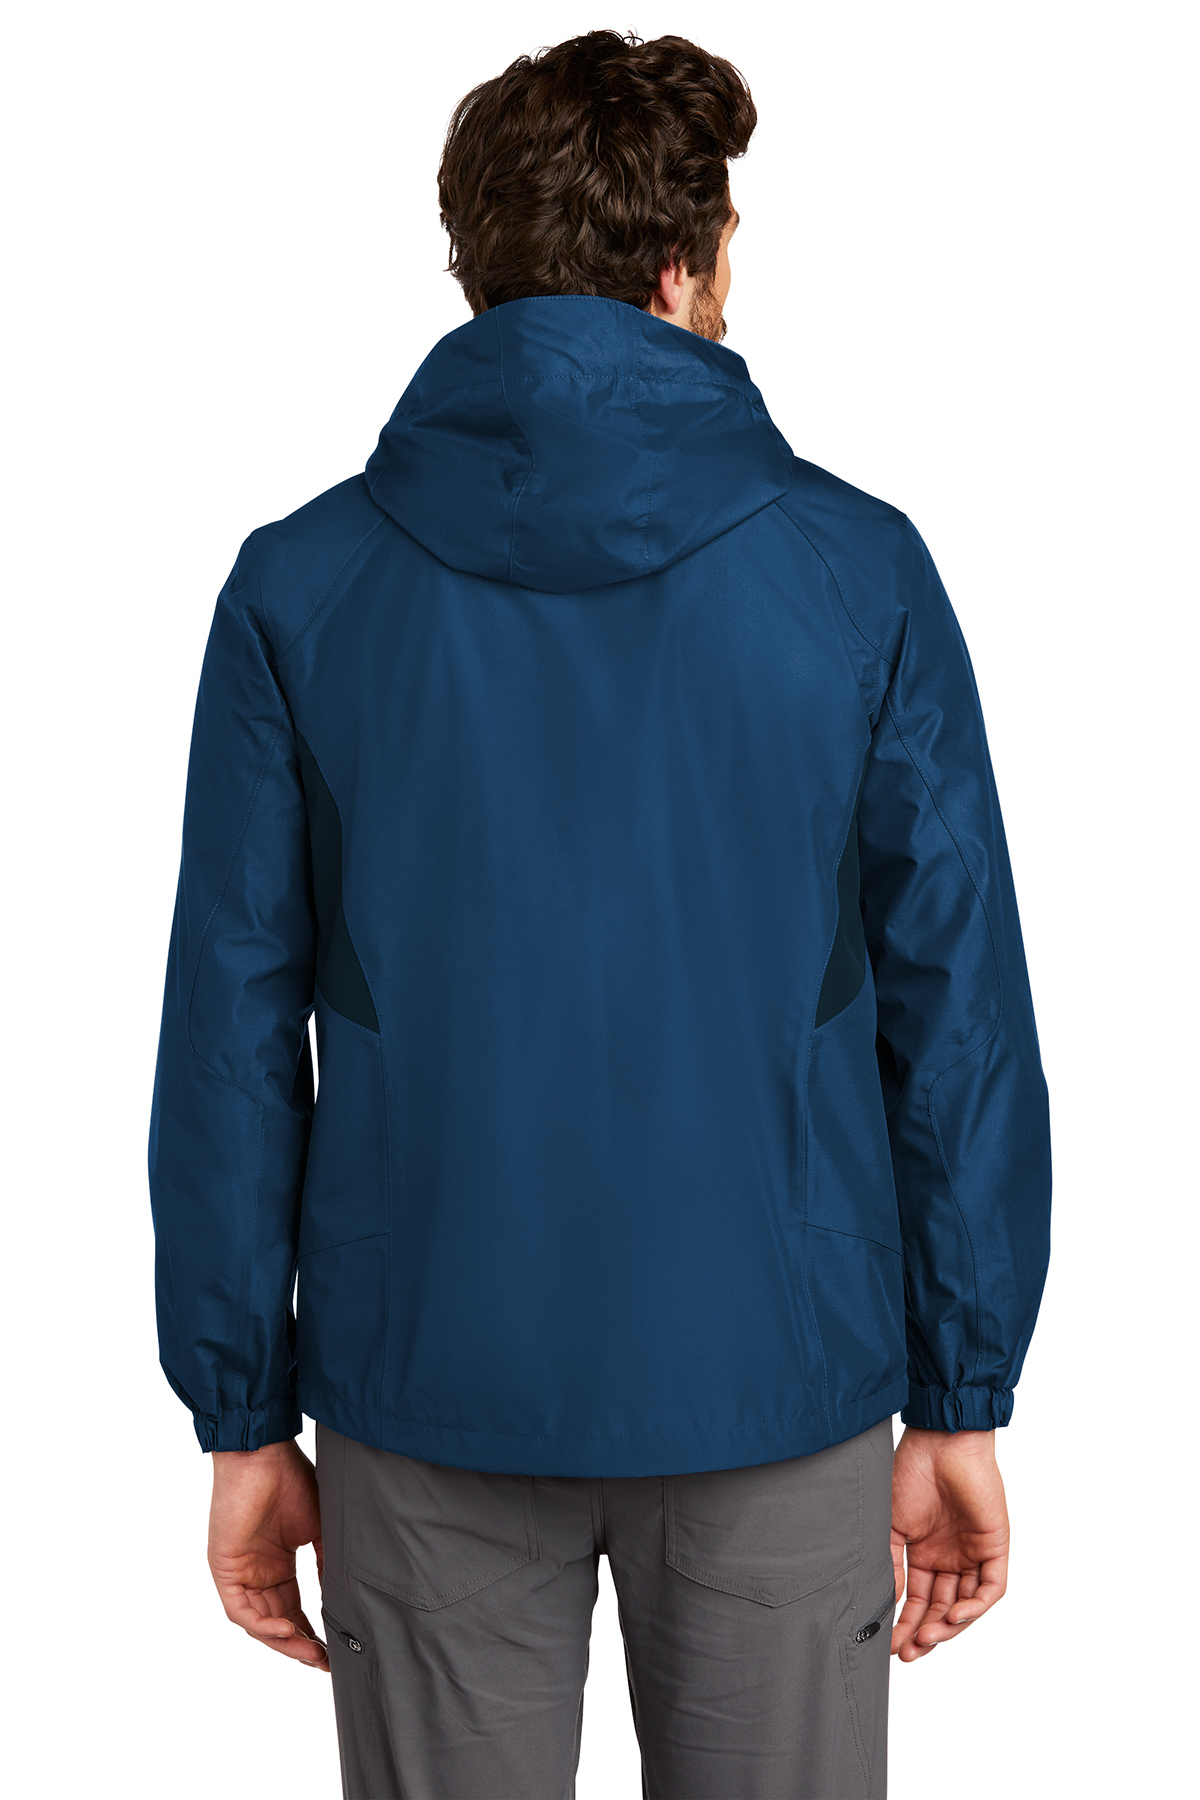 Eddie Bauer - Rain Jacket | Product | SanMar